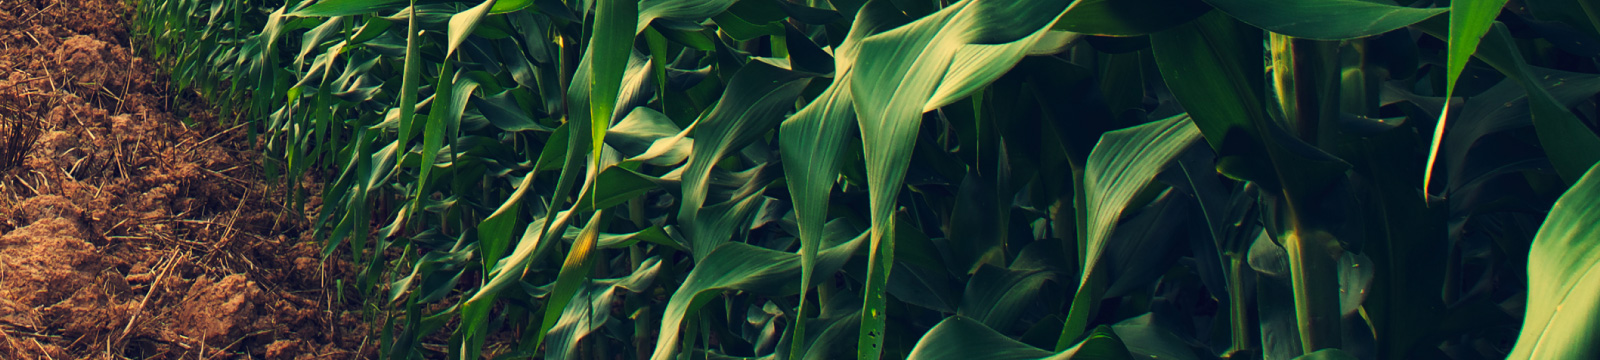 A row of corn in a field